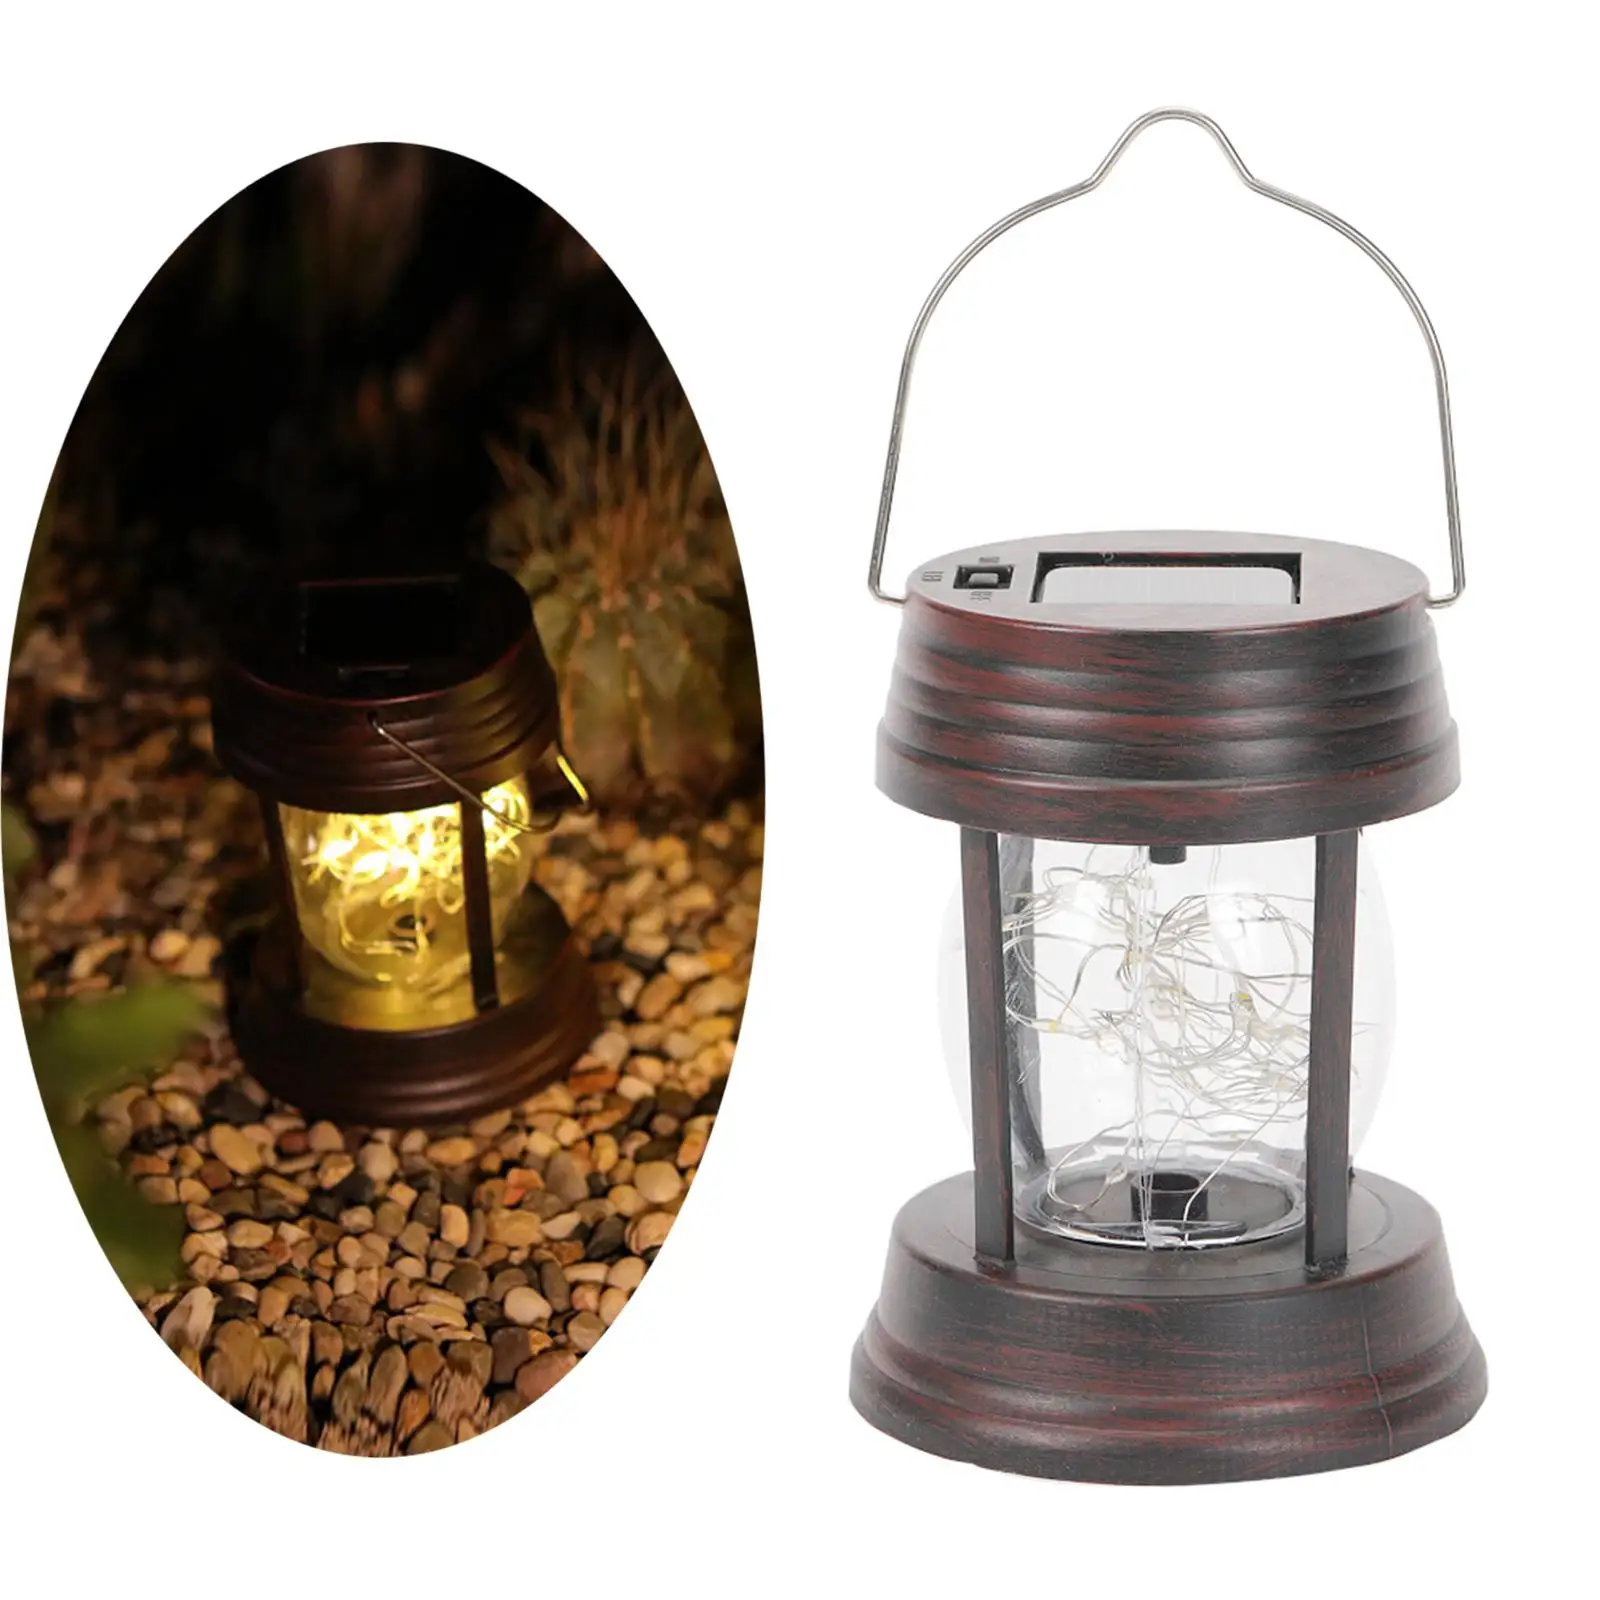 Retro Garden Solar Lantern Light Dusk to Dawn Super Bright Waterproof LED Lamp for Lawn Walkway Path Outdoor, Camping Lantern